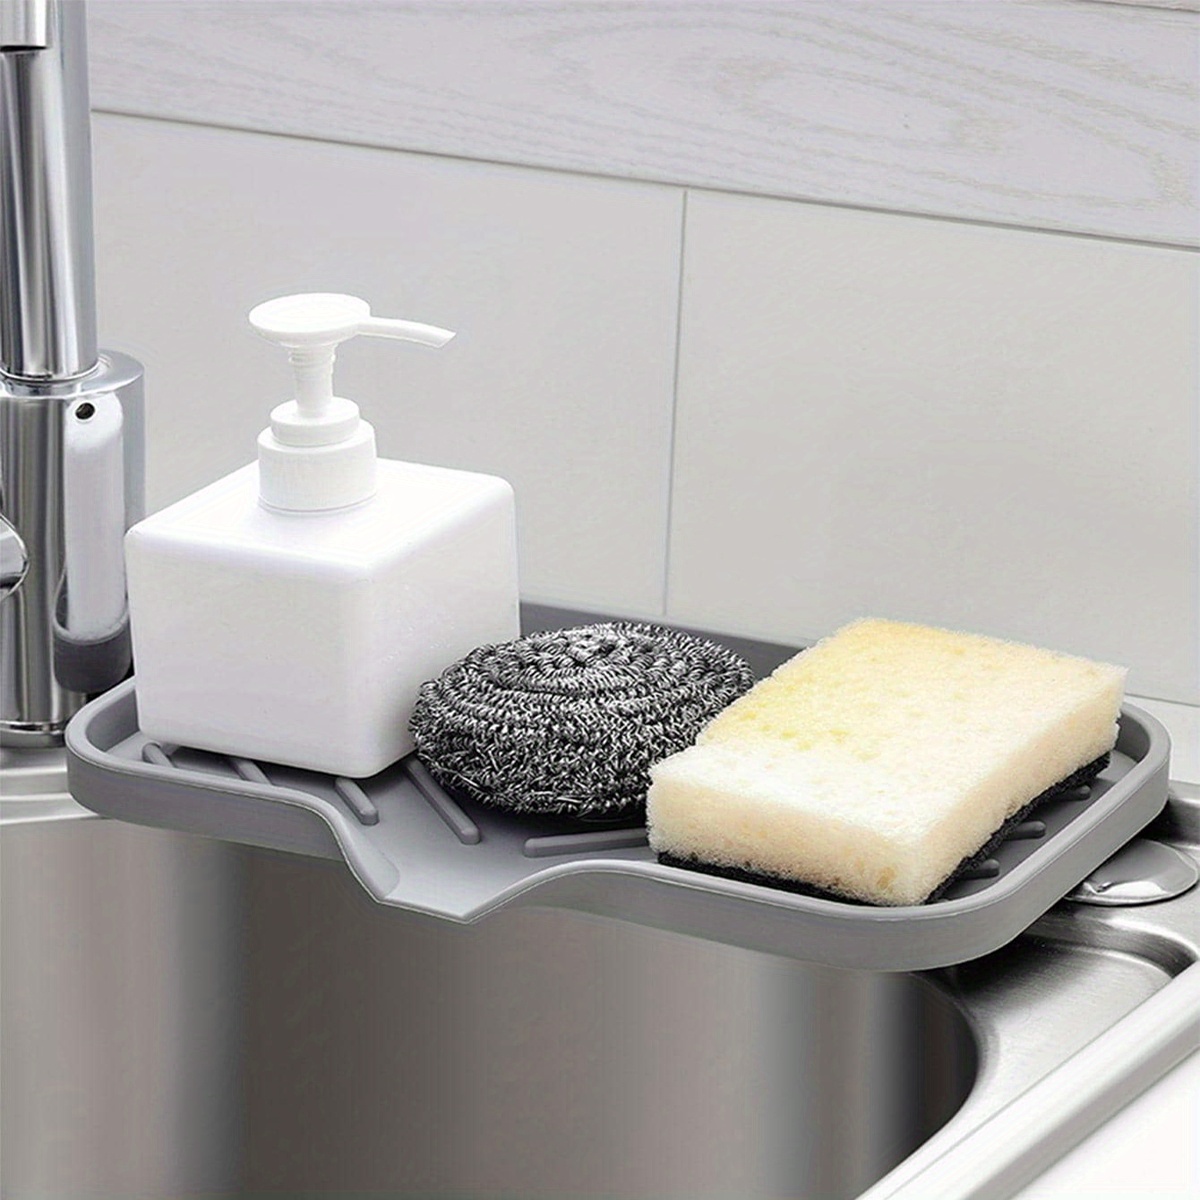 AllTopBargains 2 x Kitchen Organizer Sink Hanging Caddy Silicone Basket Dish Sponge Soap Holder